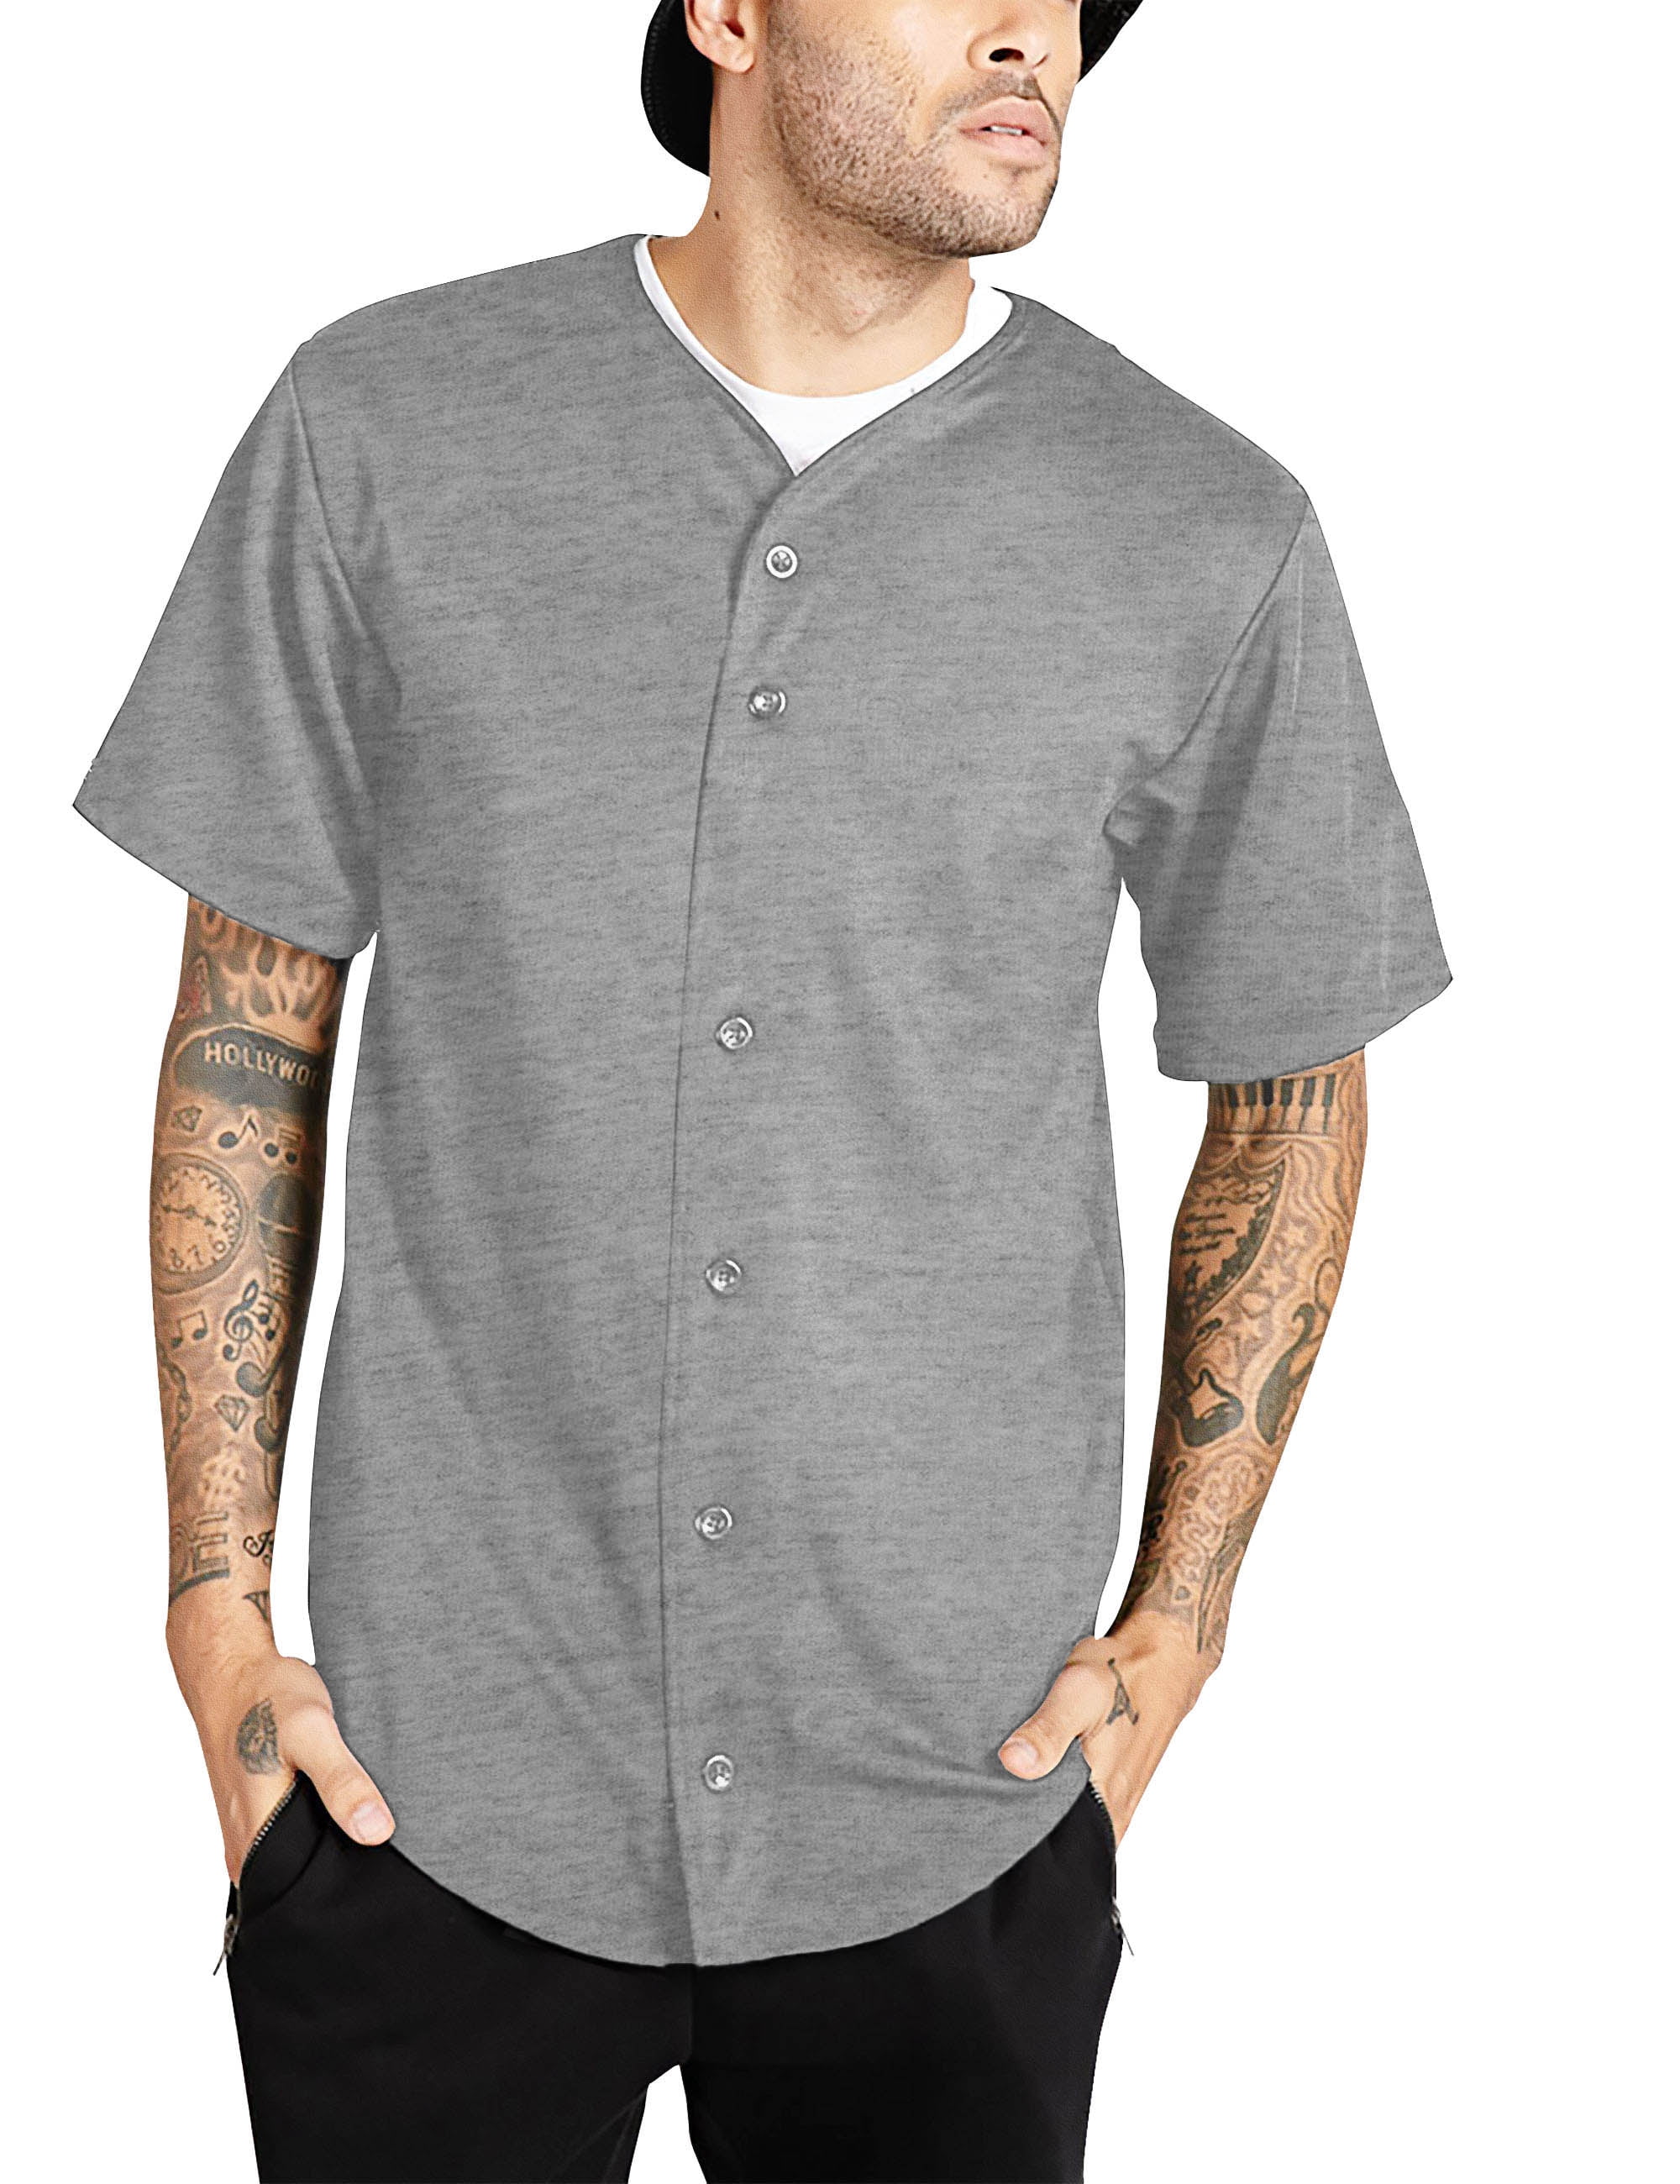 HETHCODE Mens Lightweight Short Sleeve Pocket Baseball Jerseys Active Tee Shirt 